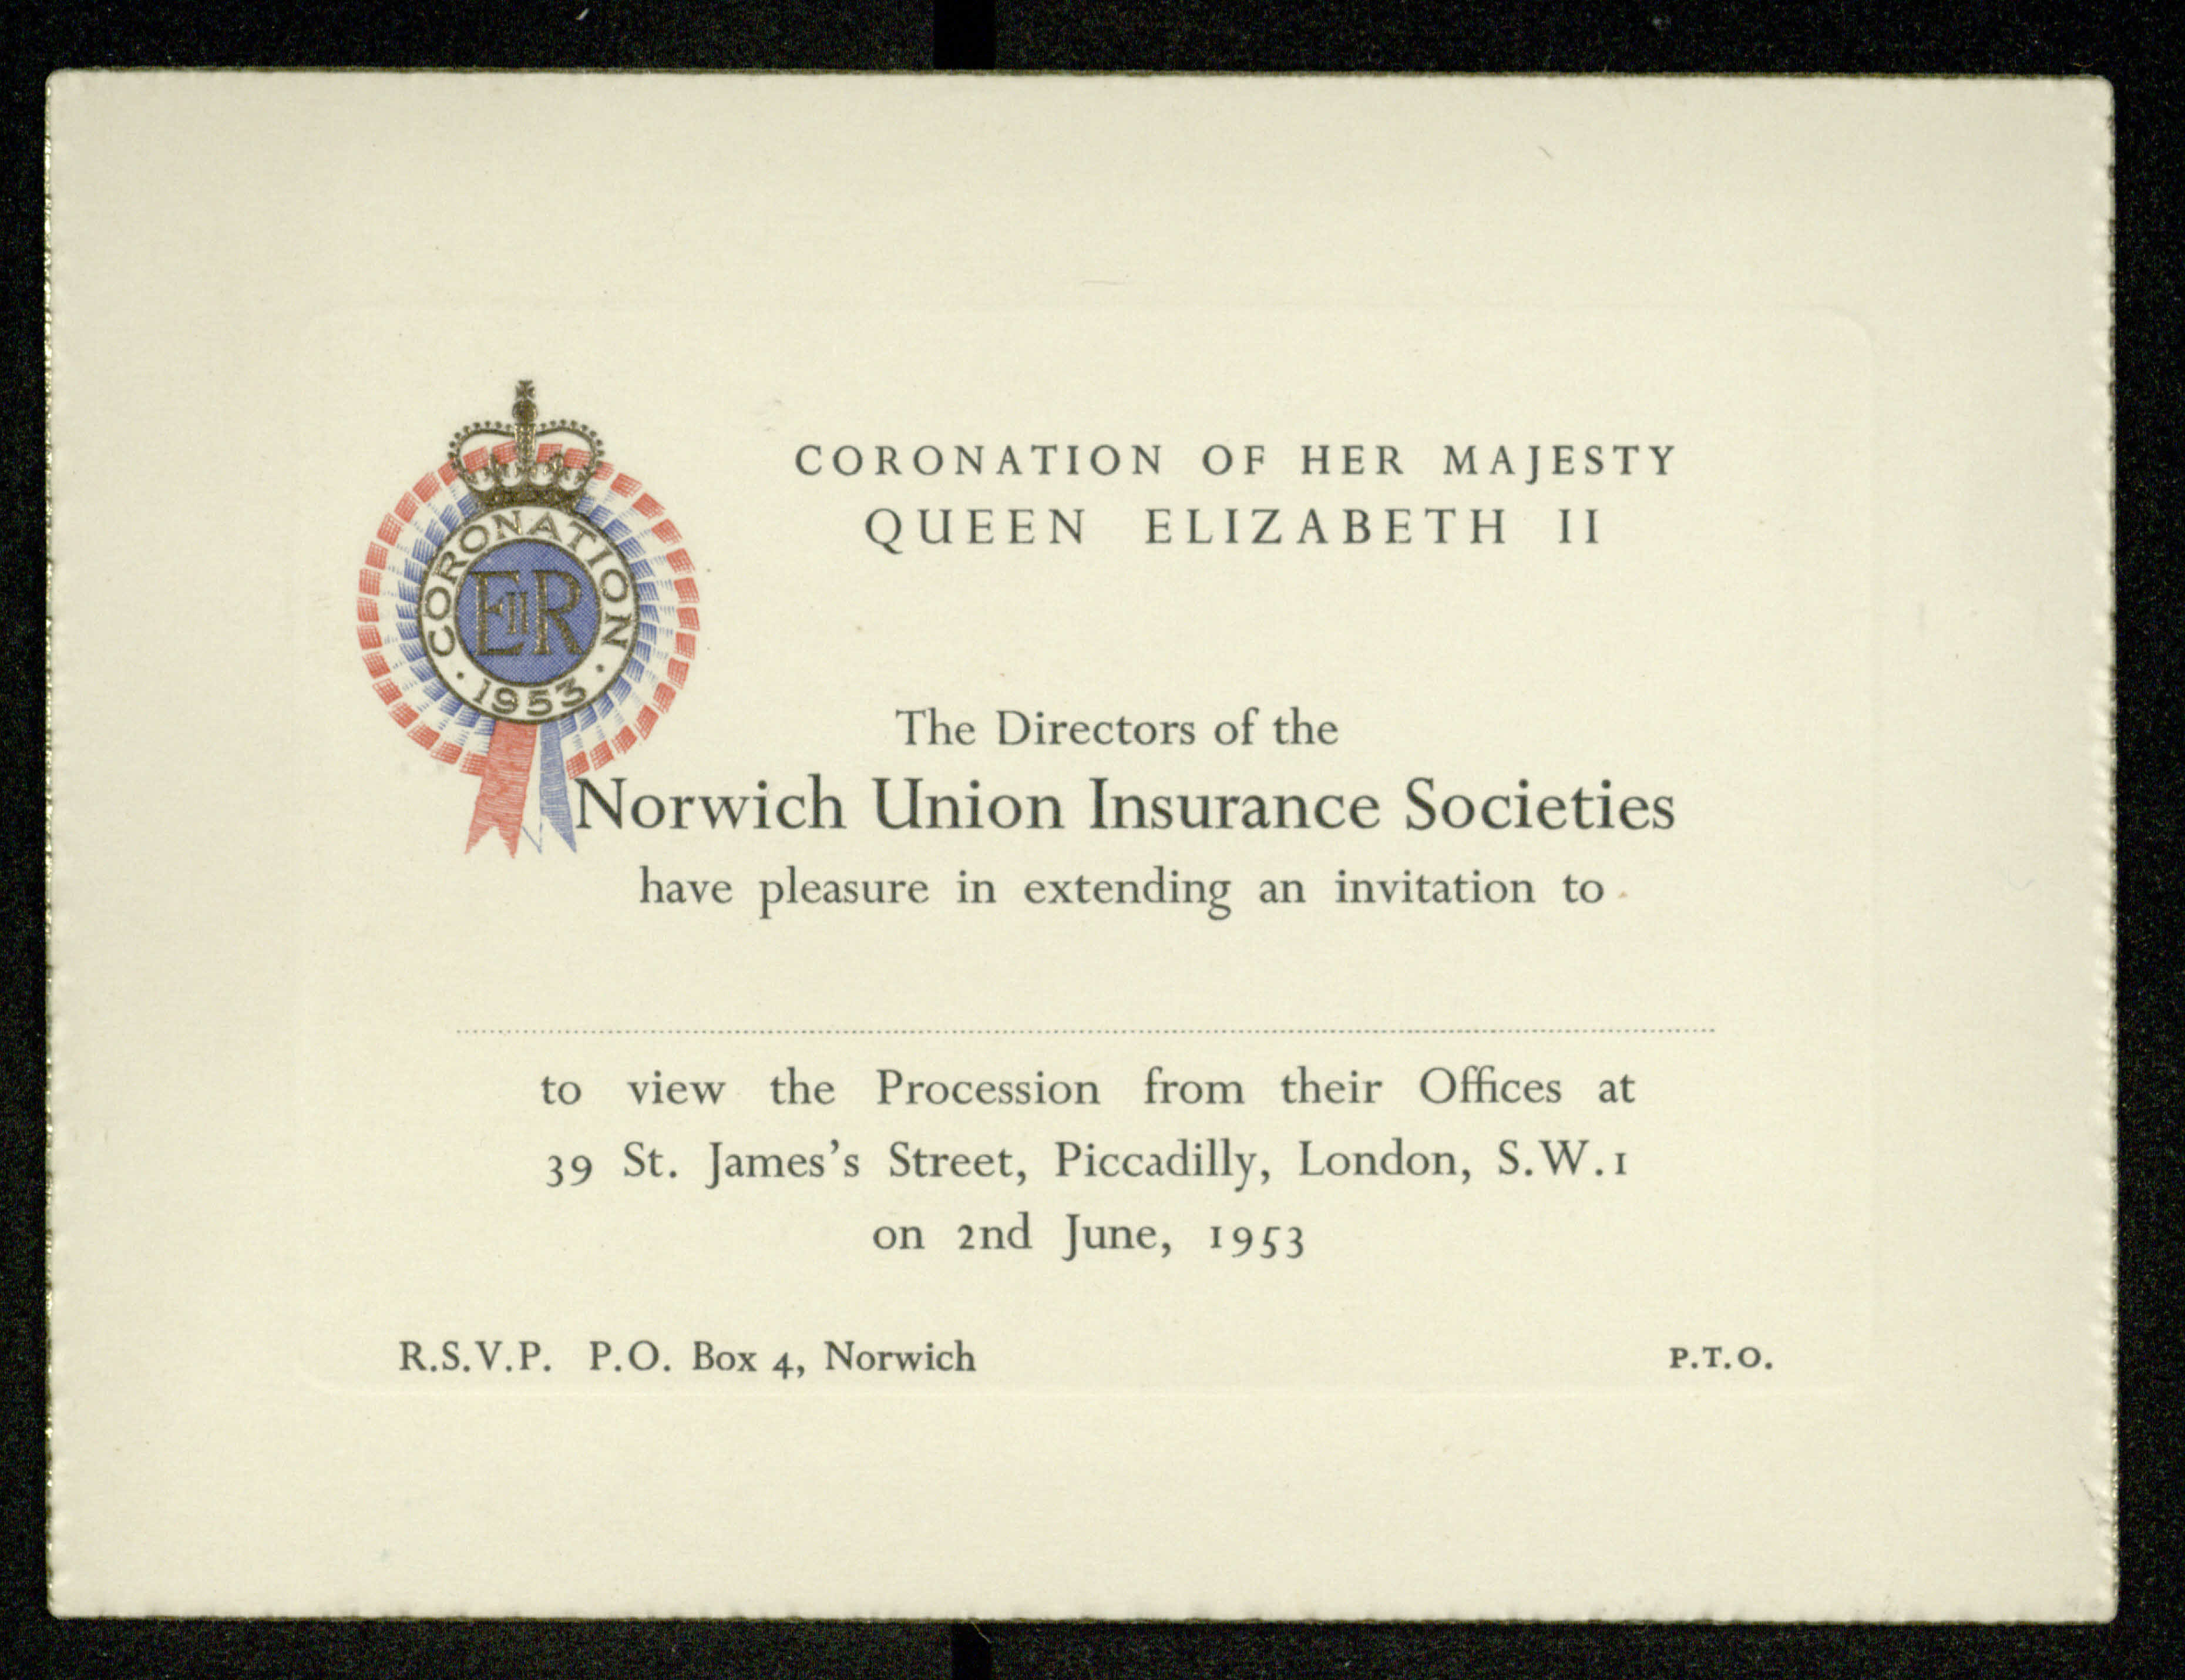 Norwich Union coronation celebrations invitation from 1953